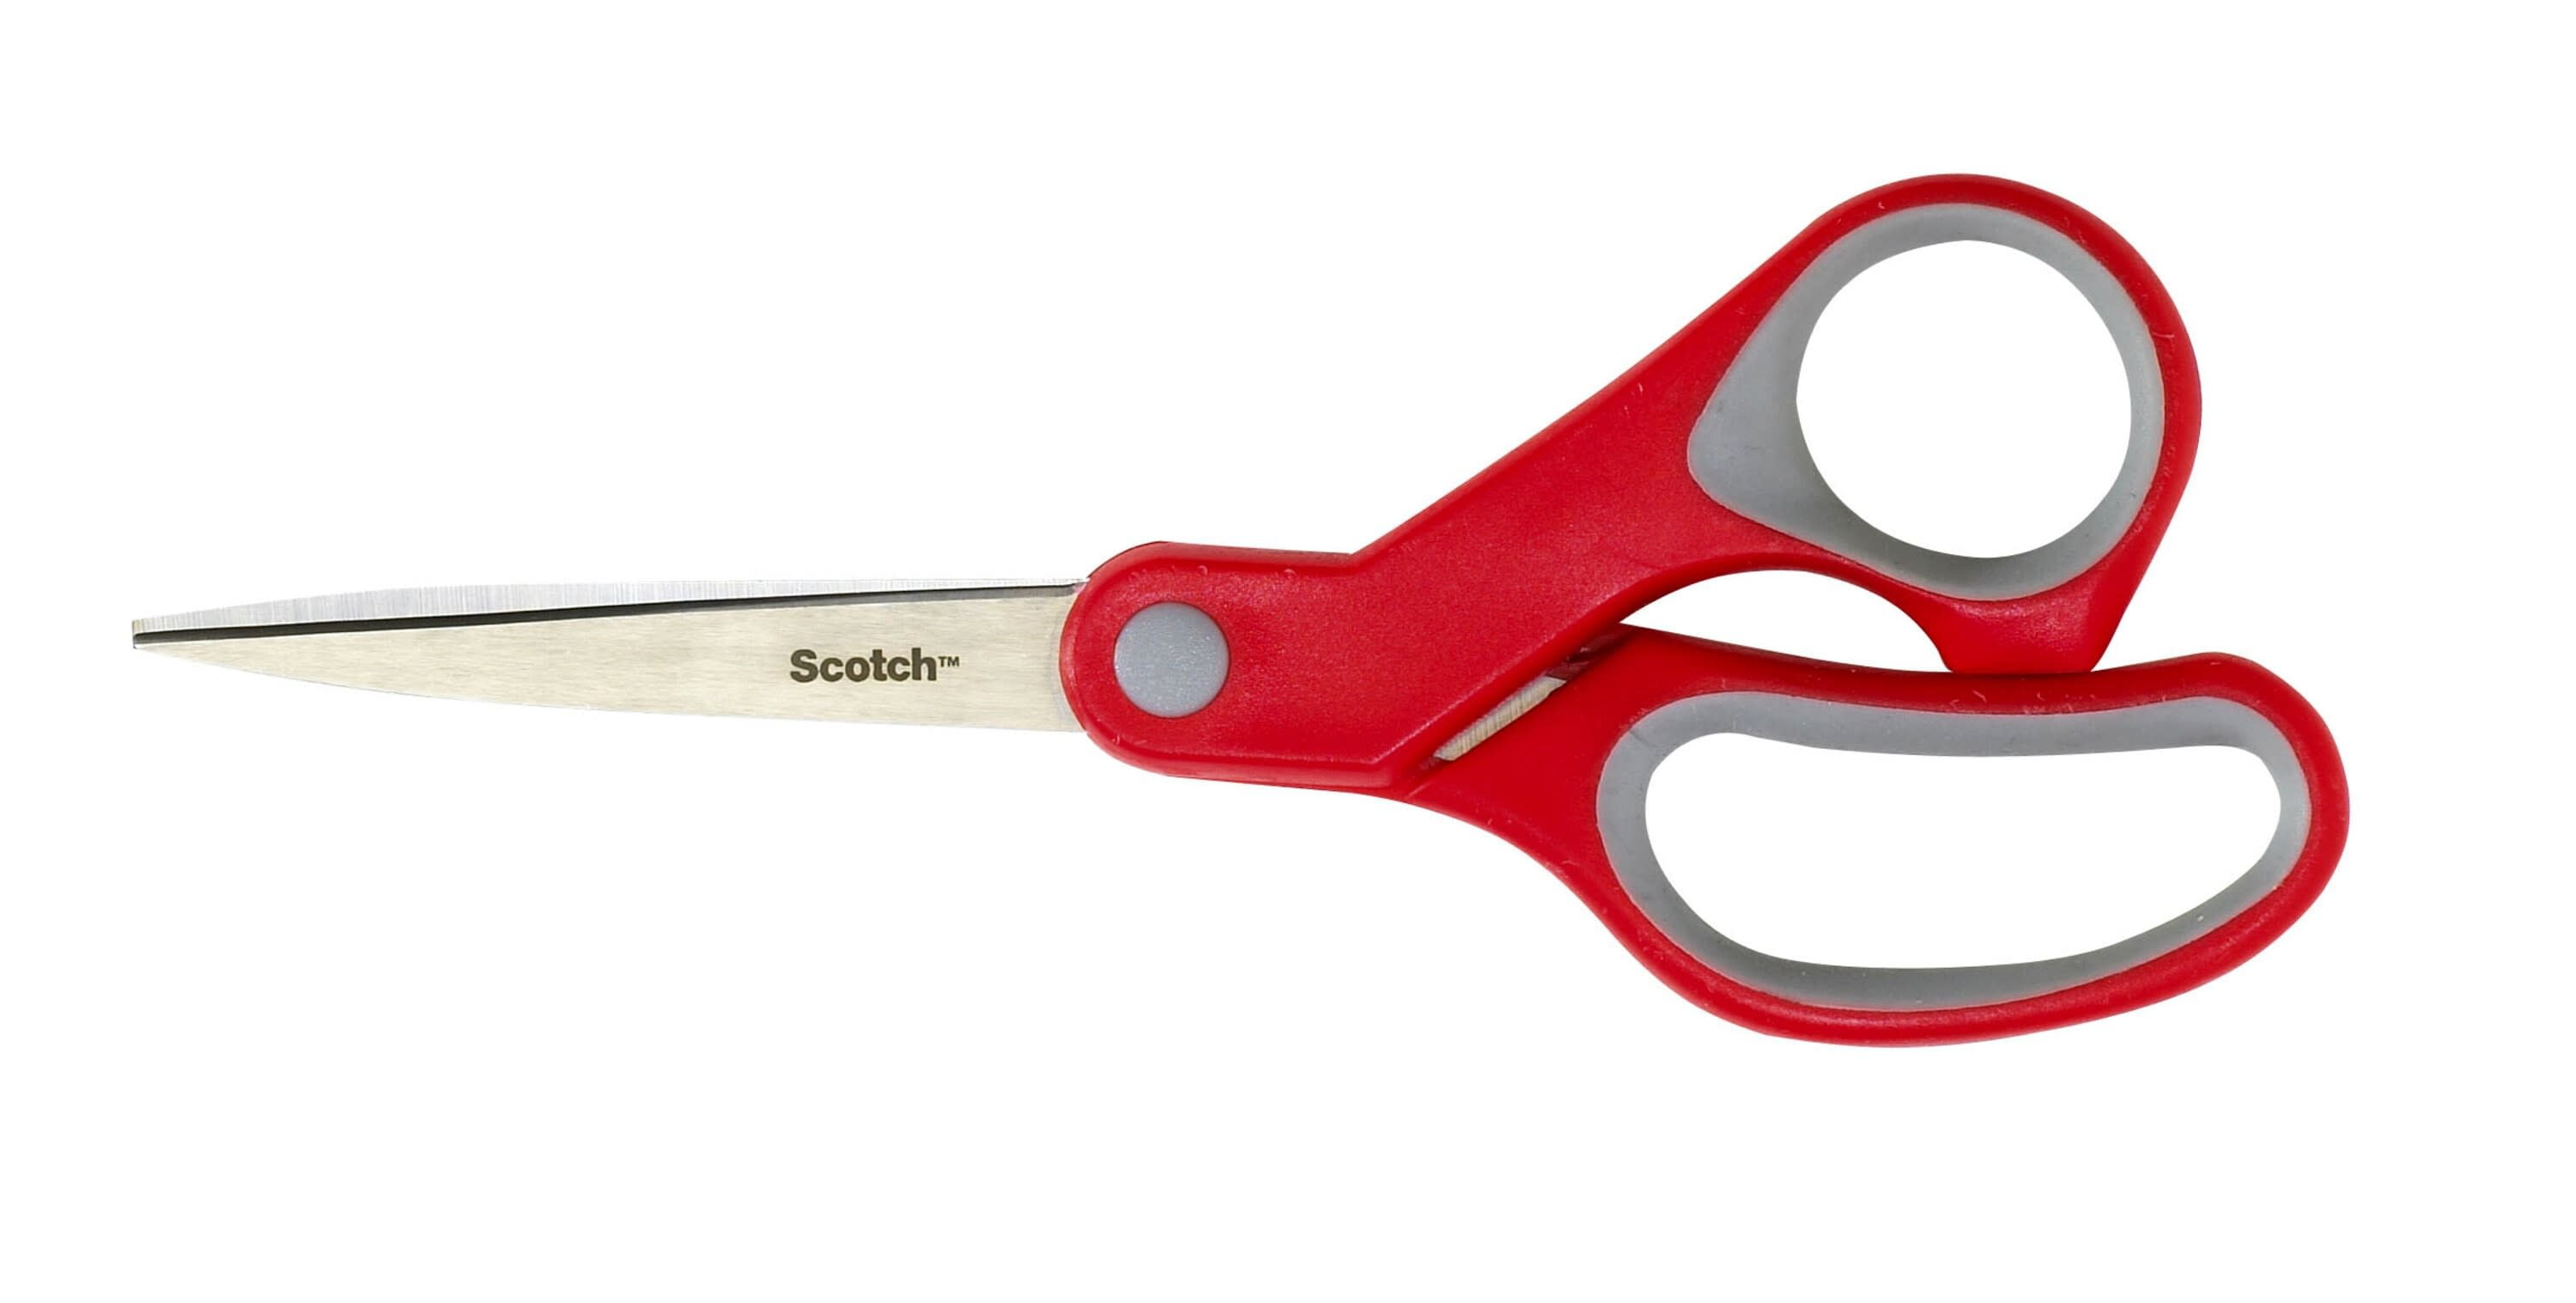 Multifunctional kitchen household scissors, red office scissors, stainless  steel household scissors, student ribbon scissors, - AliExpress